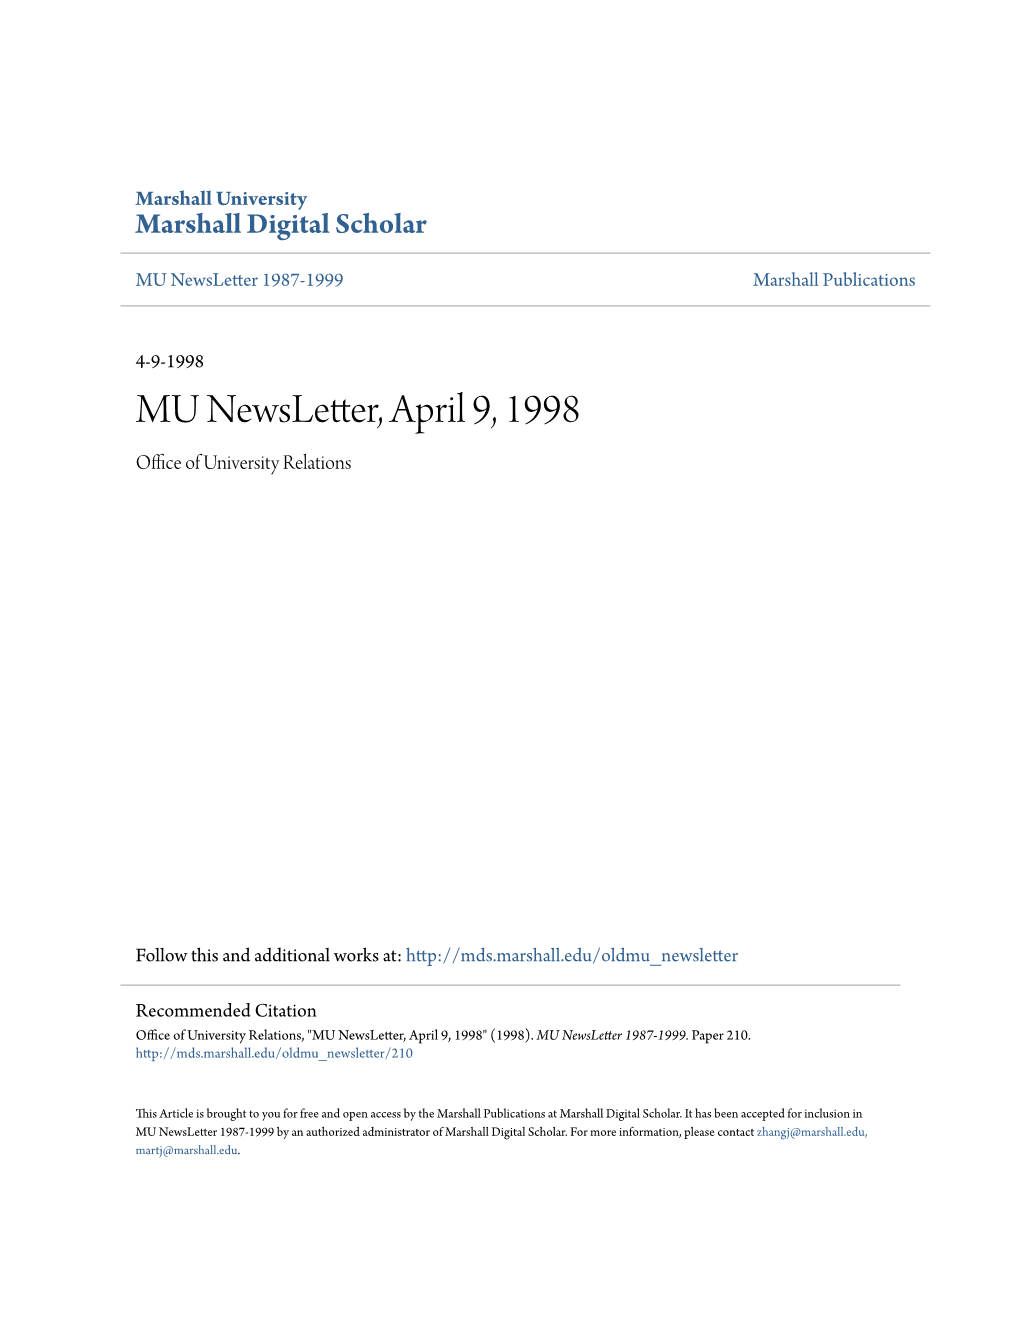 MU Newsletter, April 9, 1998 Office Ofni U Versity Relations